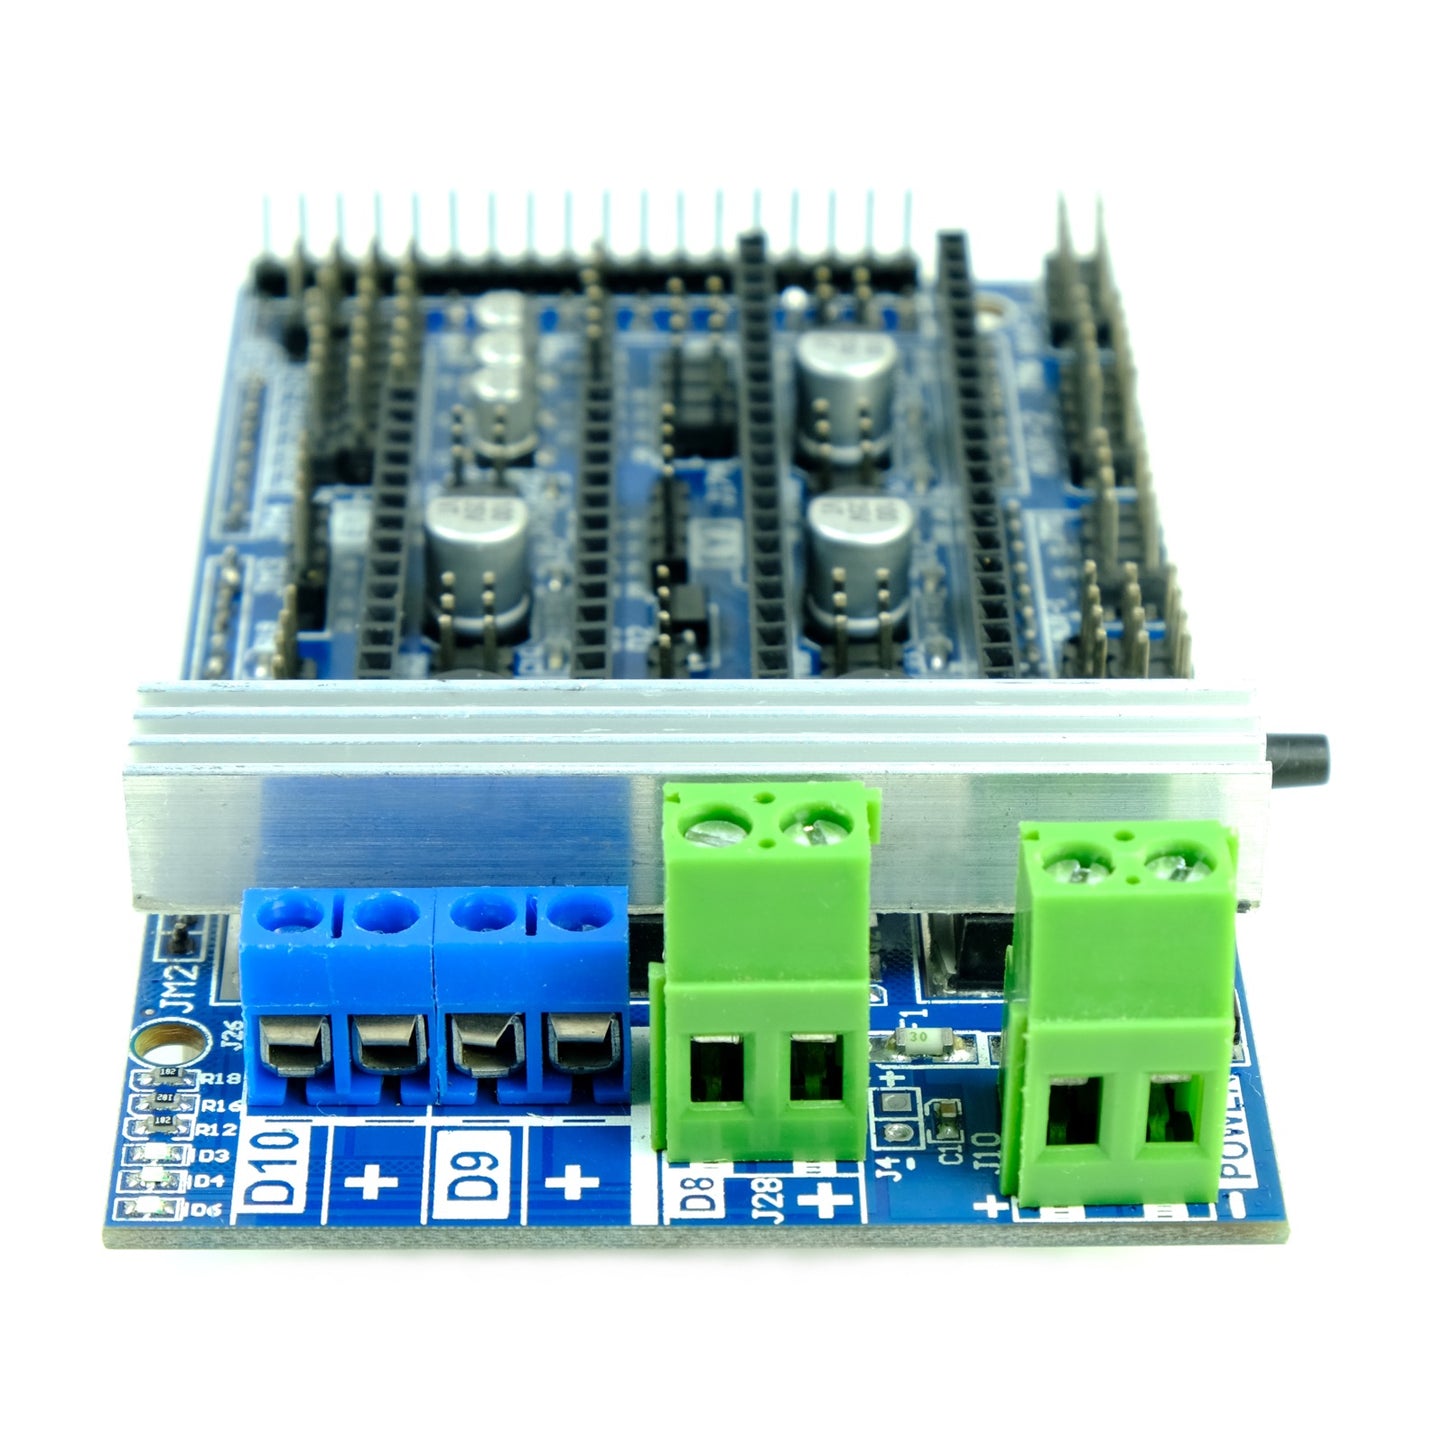 RAMPS 1.6 Shield for Arduino Mega and RepRap 3D Printers